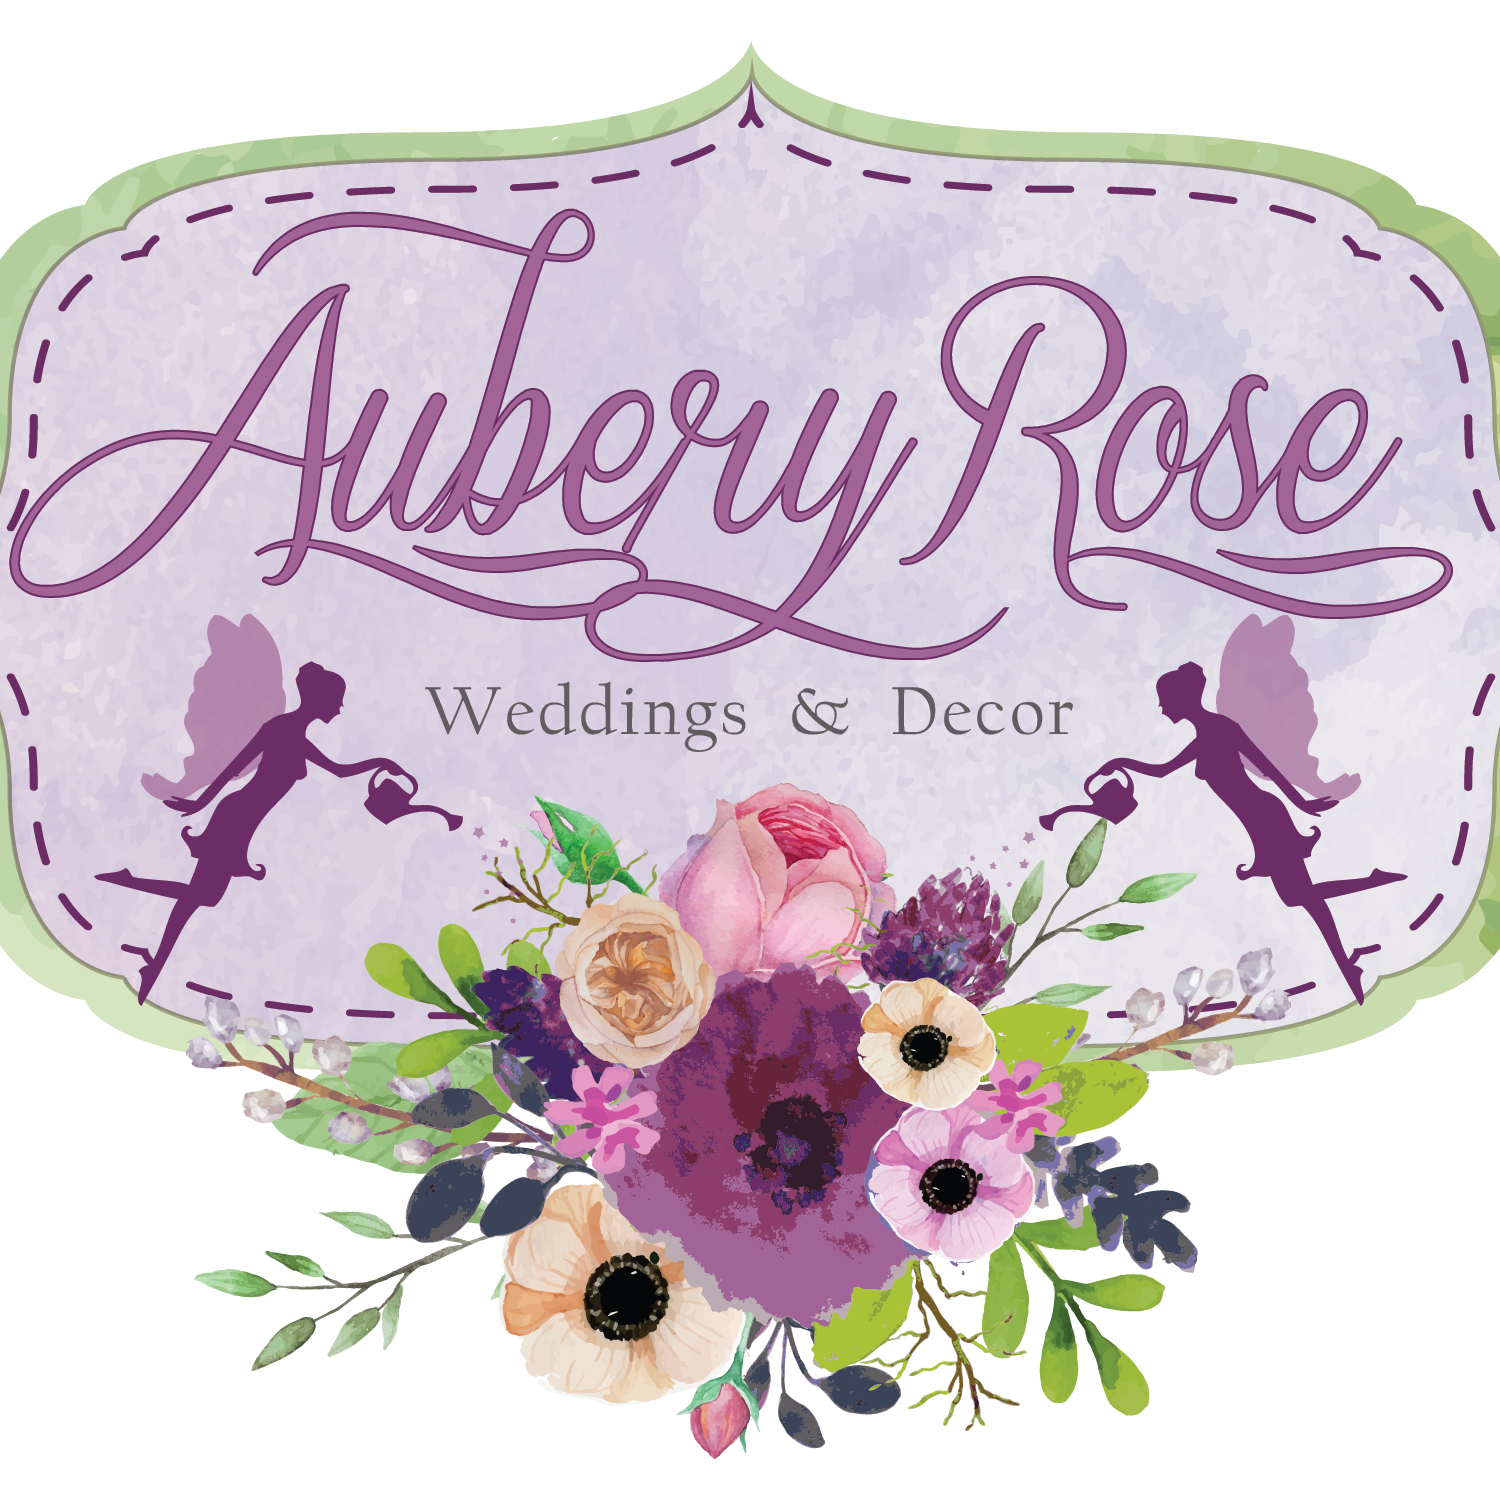 Aubery Rose Wedding - The Woodlands, TX - (936)777-4130 | ShowMeLocal.com